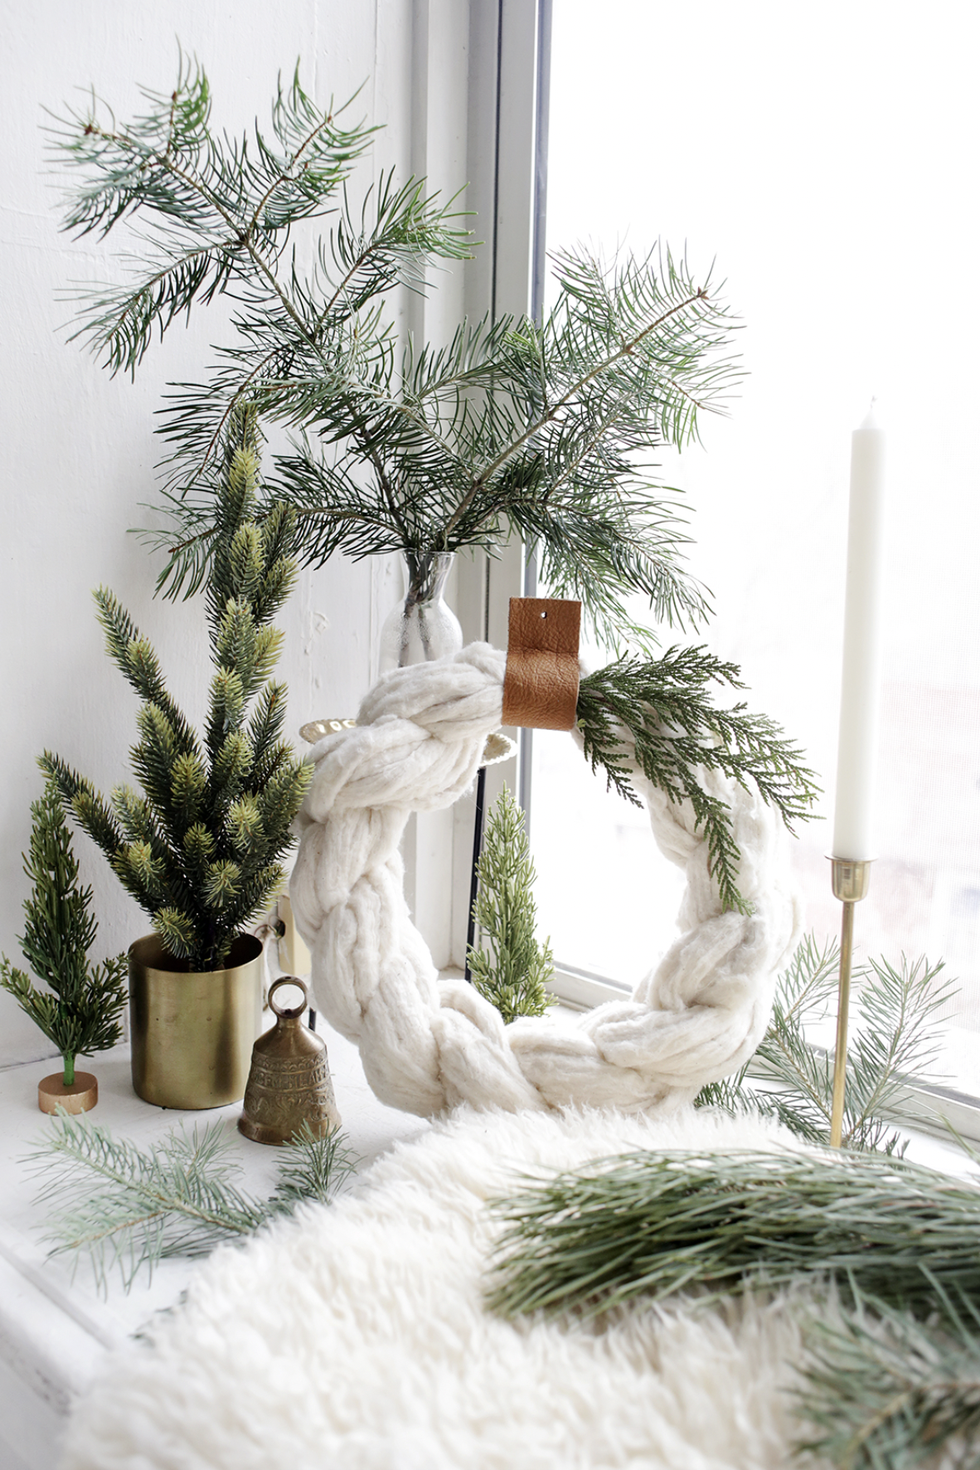 rustic DIY Christmas decorations - DIY Cotton Wreath: Crafted Christmas Joy